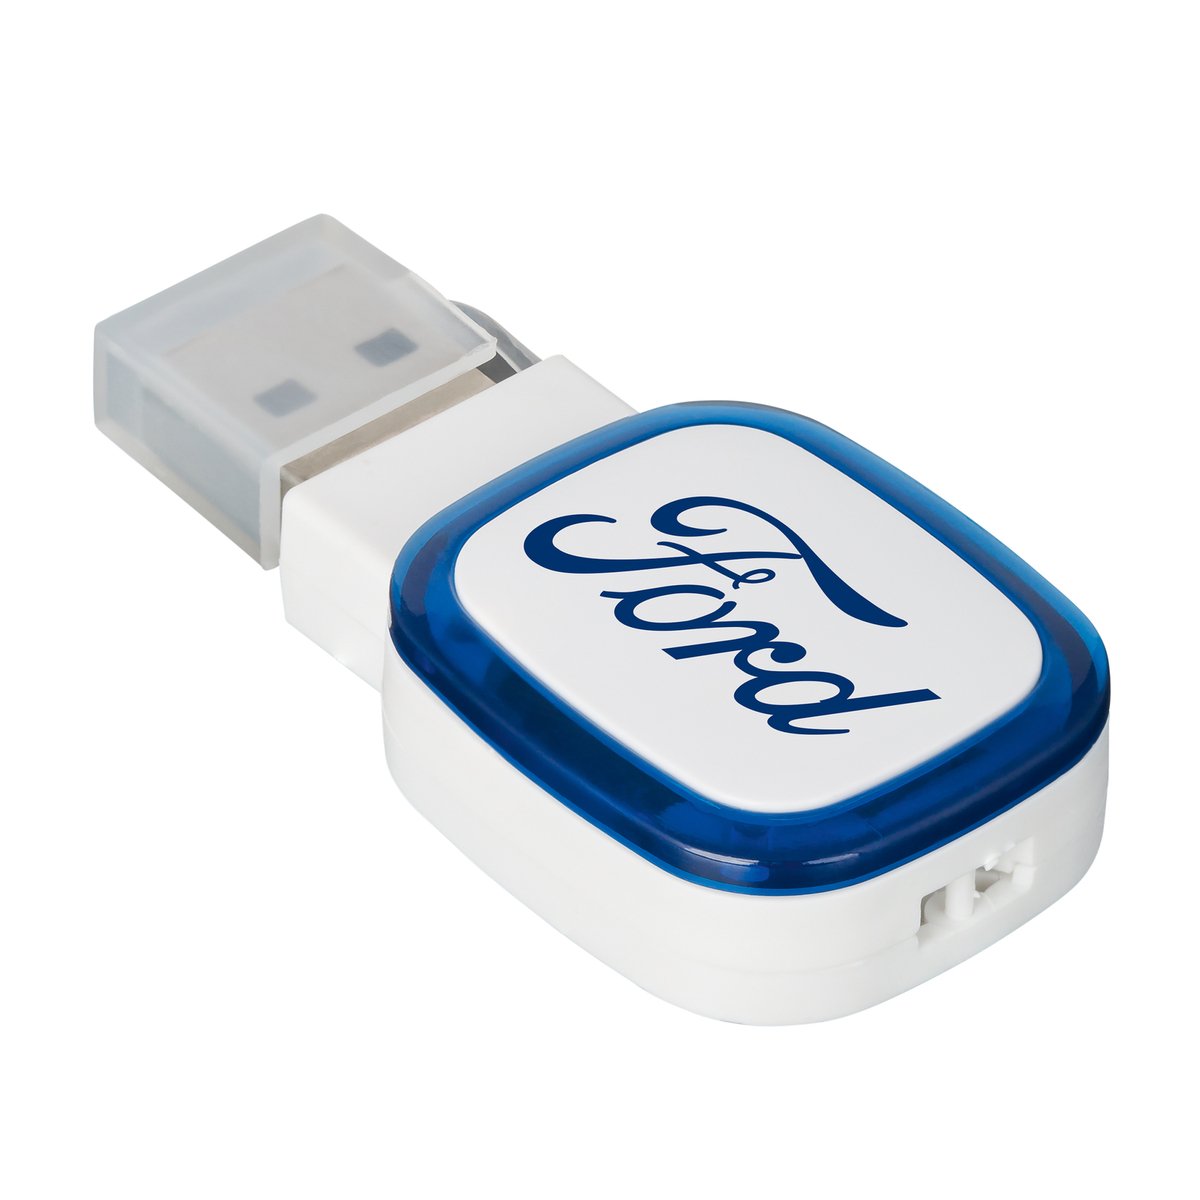 25 x 4GB USB Stick mit Ihrem LogoDruckWerbung REFLECTS ARAUCA 